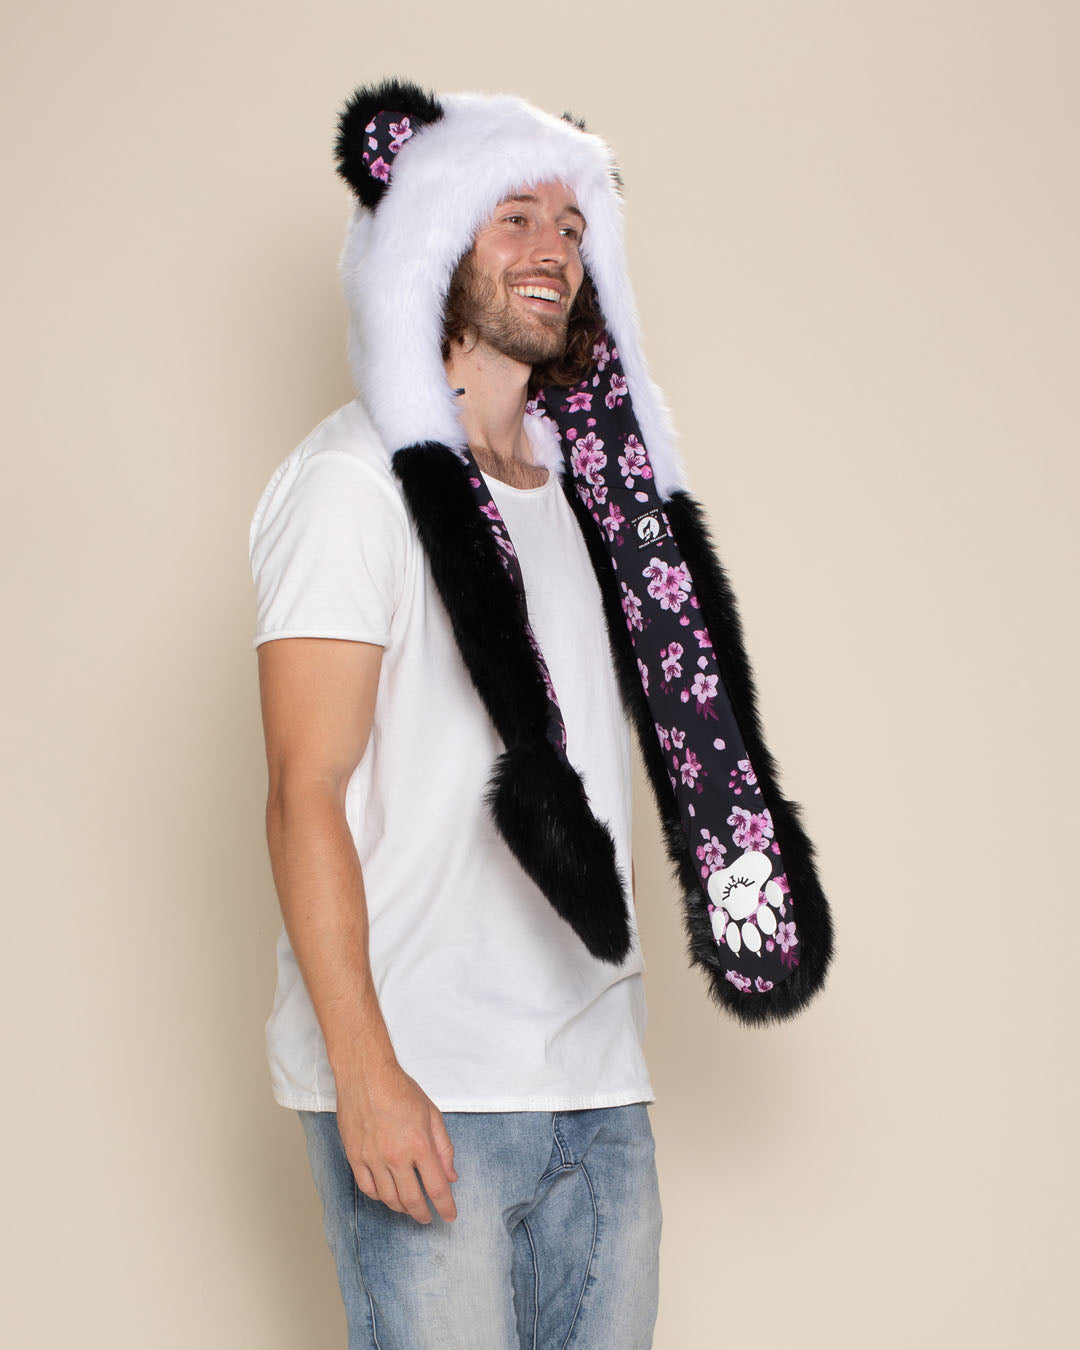 Panda Collector Edition Faux Fur Hood | Men's